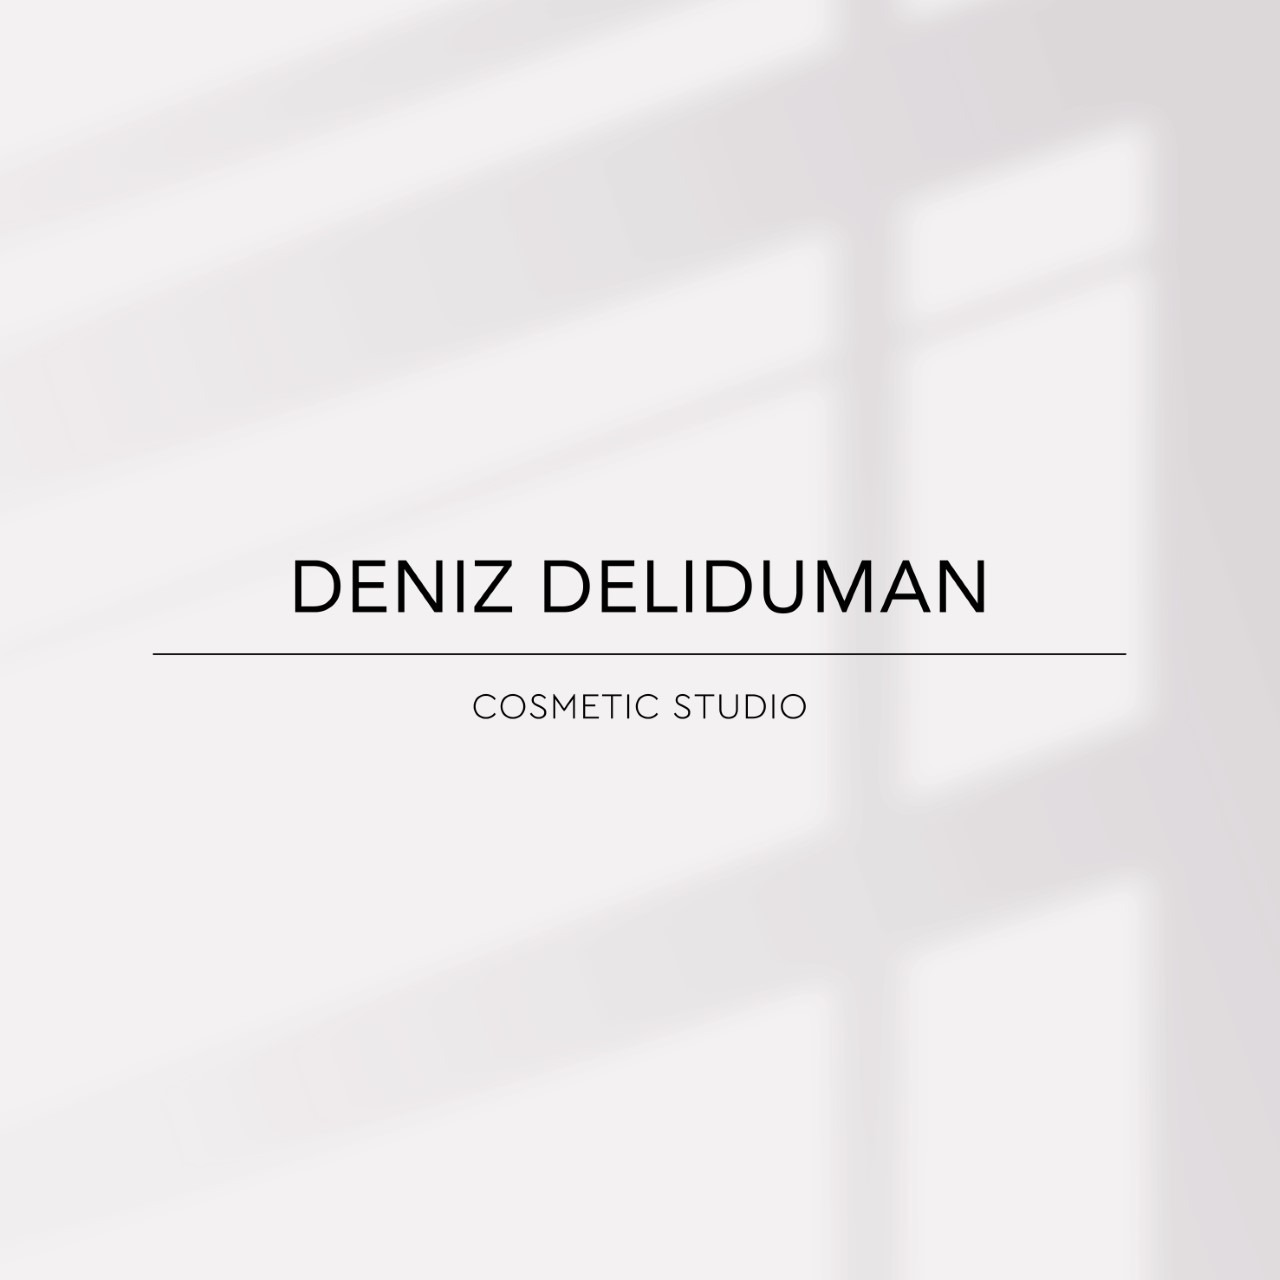 Deniz Deliduman Cosmetic Studio in München